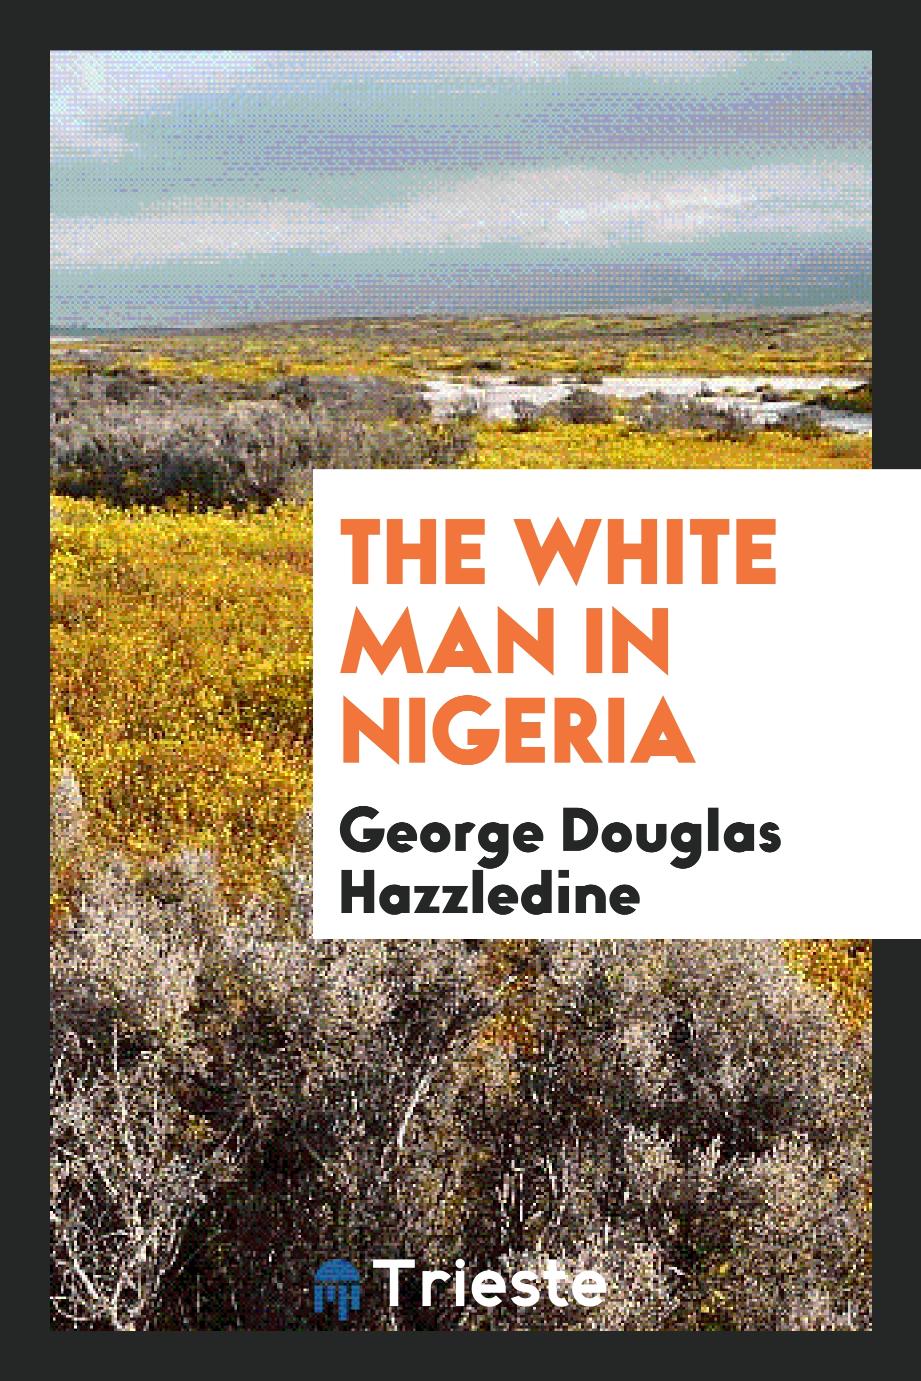 The white man in Nigeria